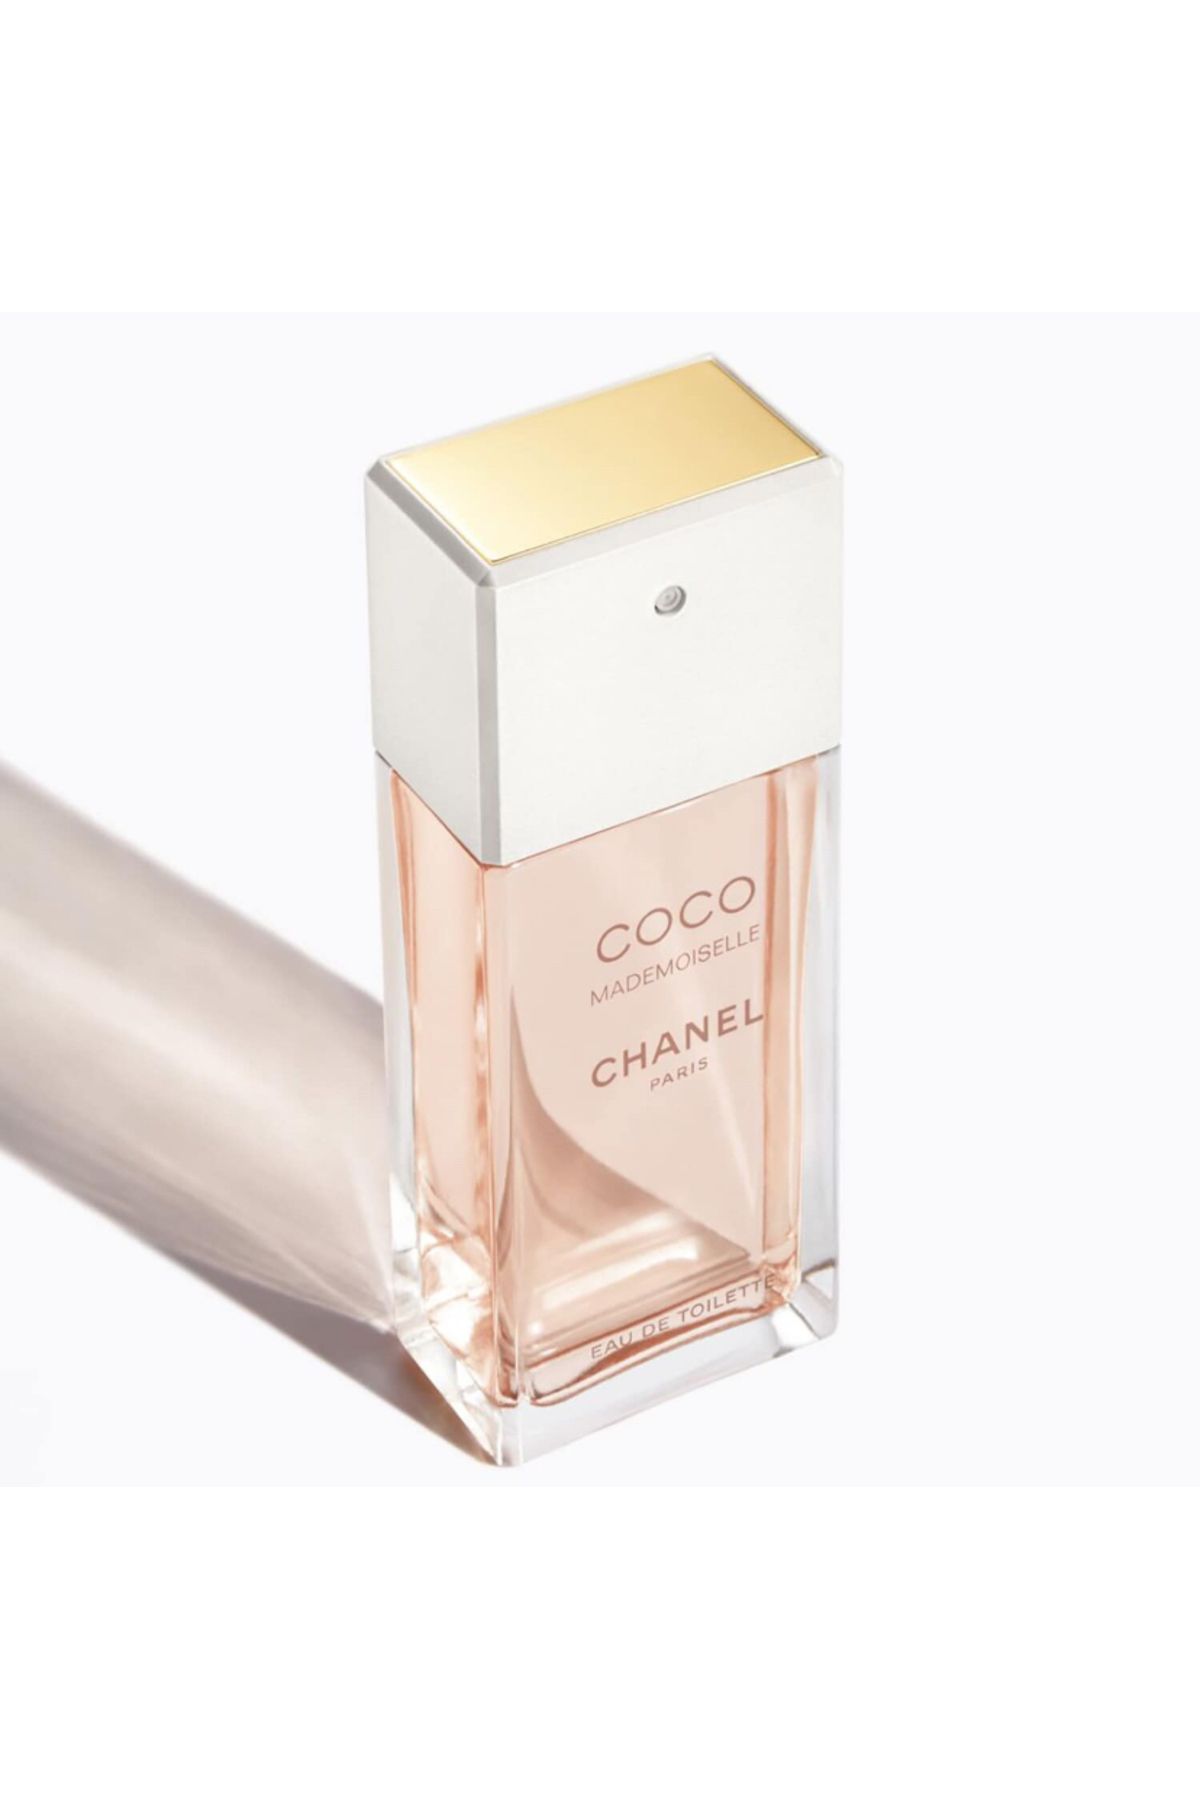 Chanel COCO MADEMOISELLE EDT PARFUM 100ml Pinkestcosmetics